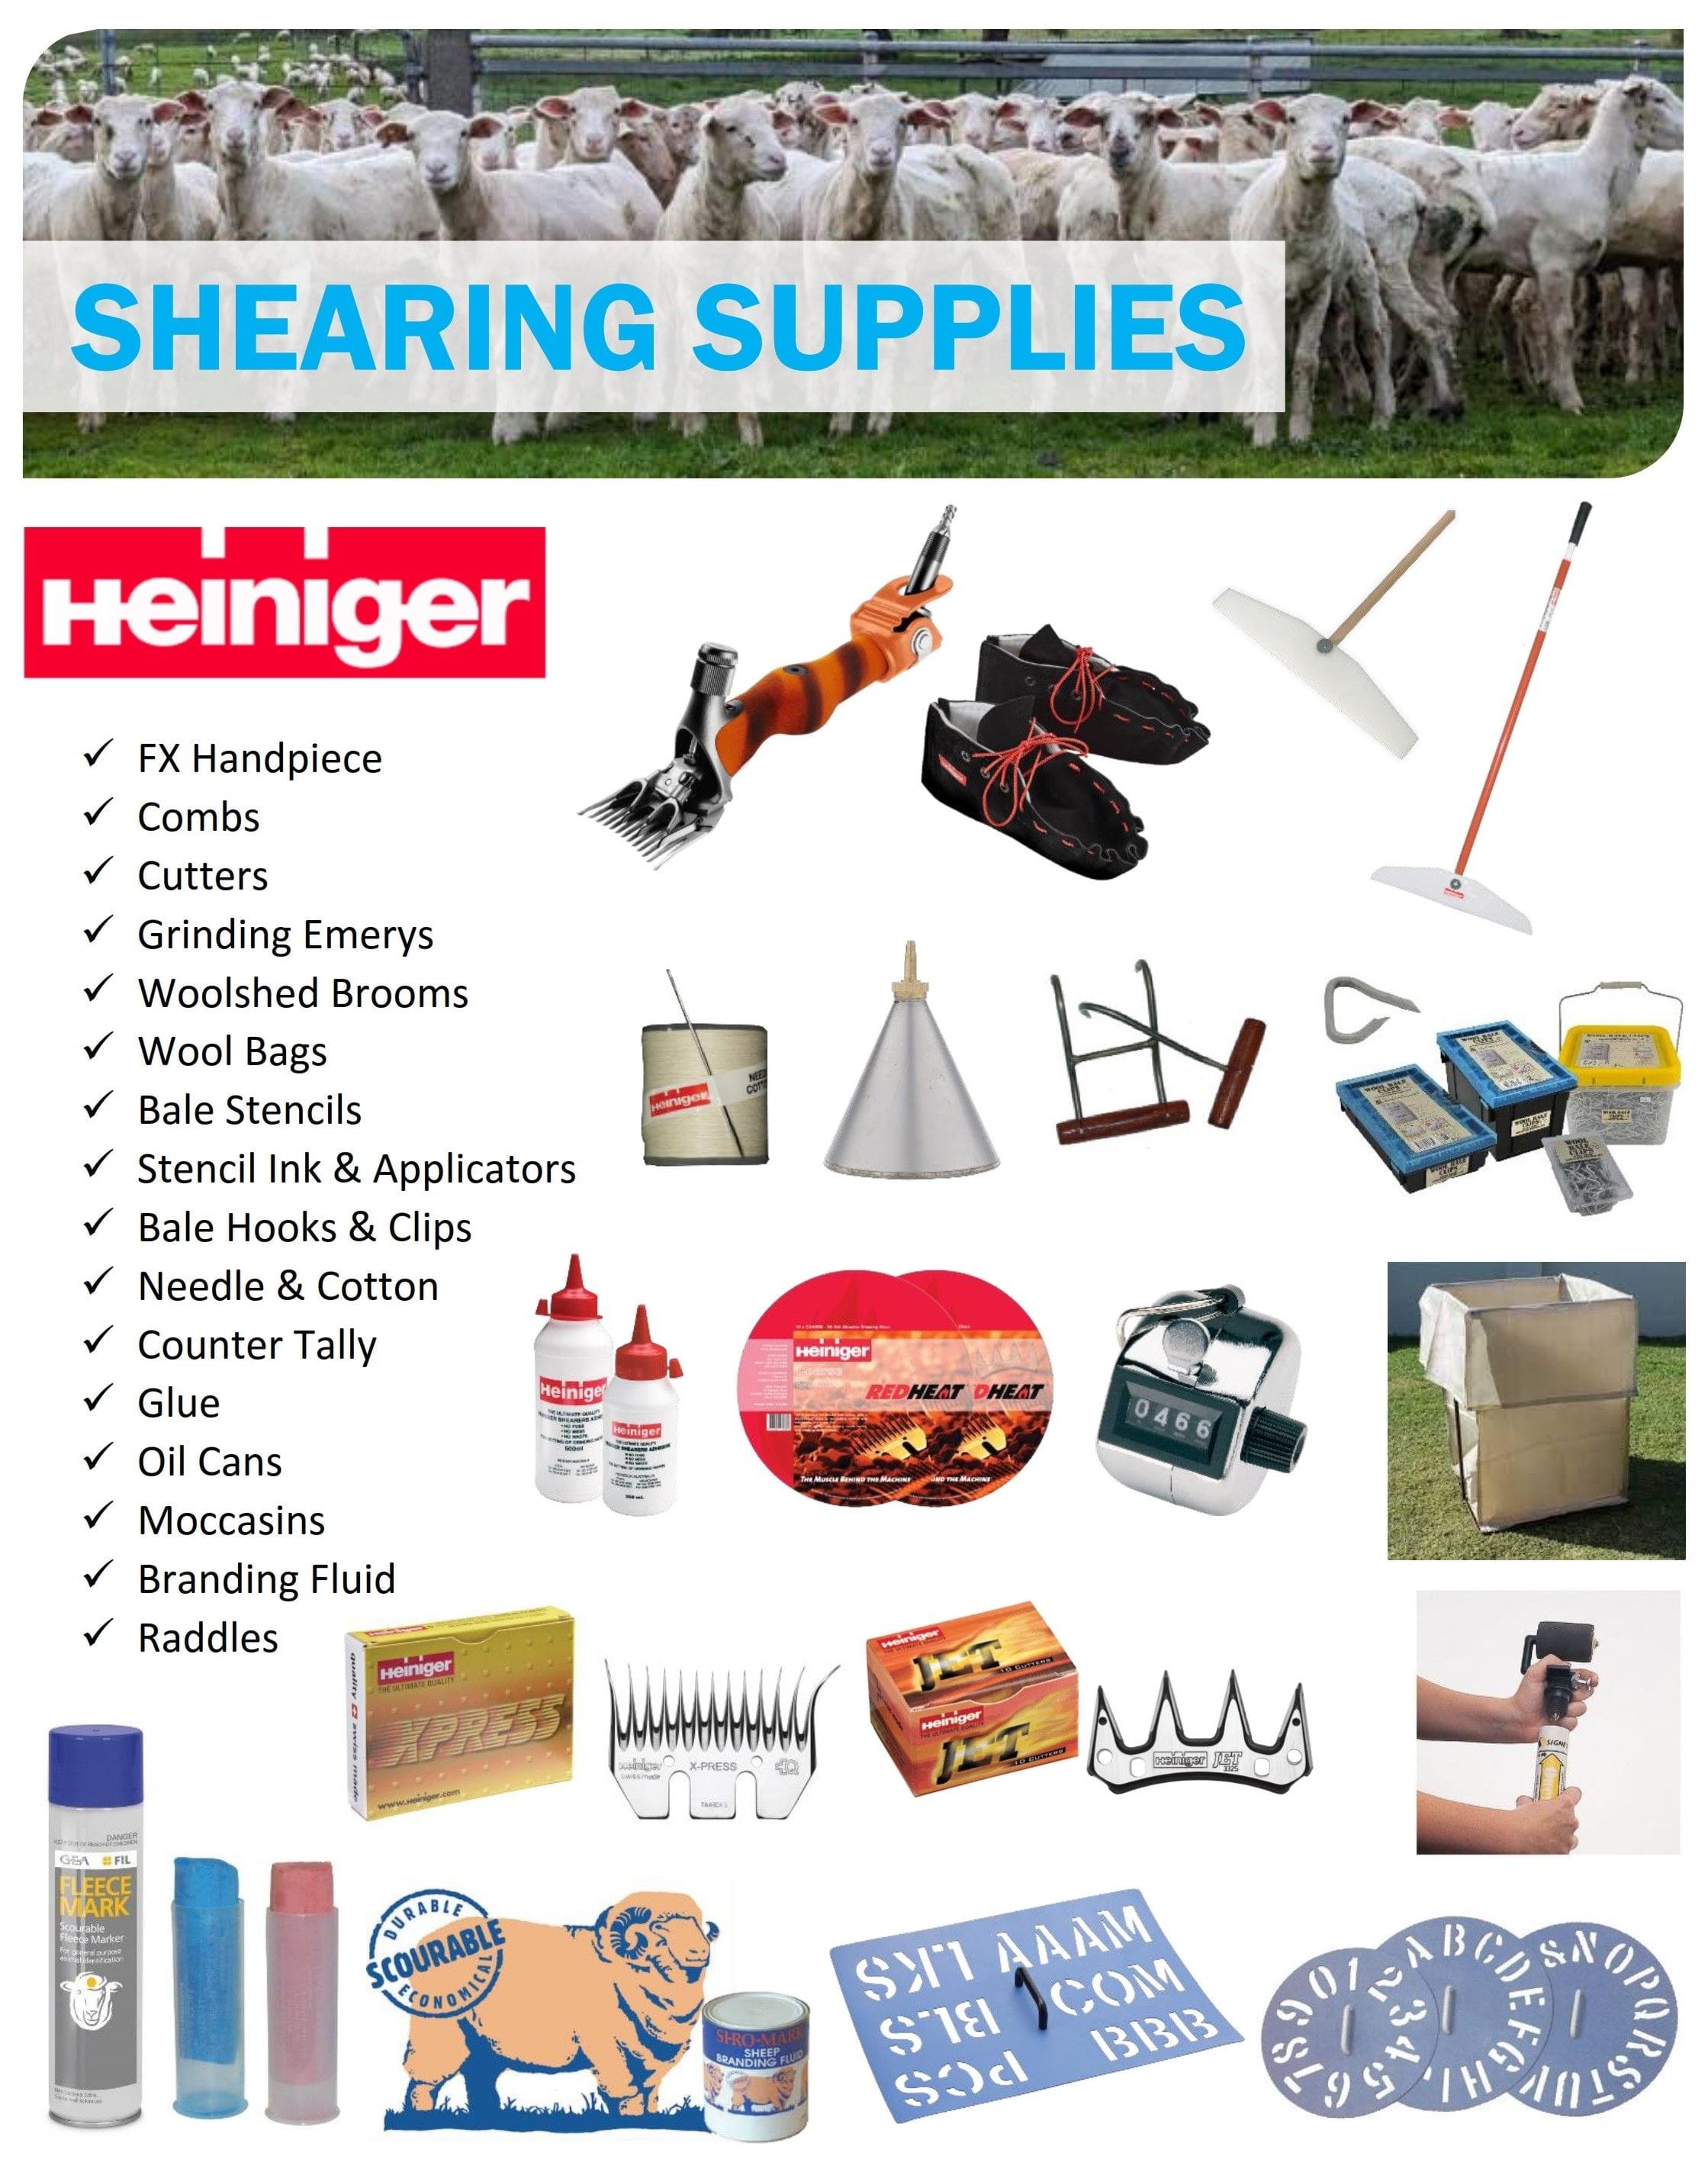 Shearing supplies